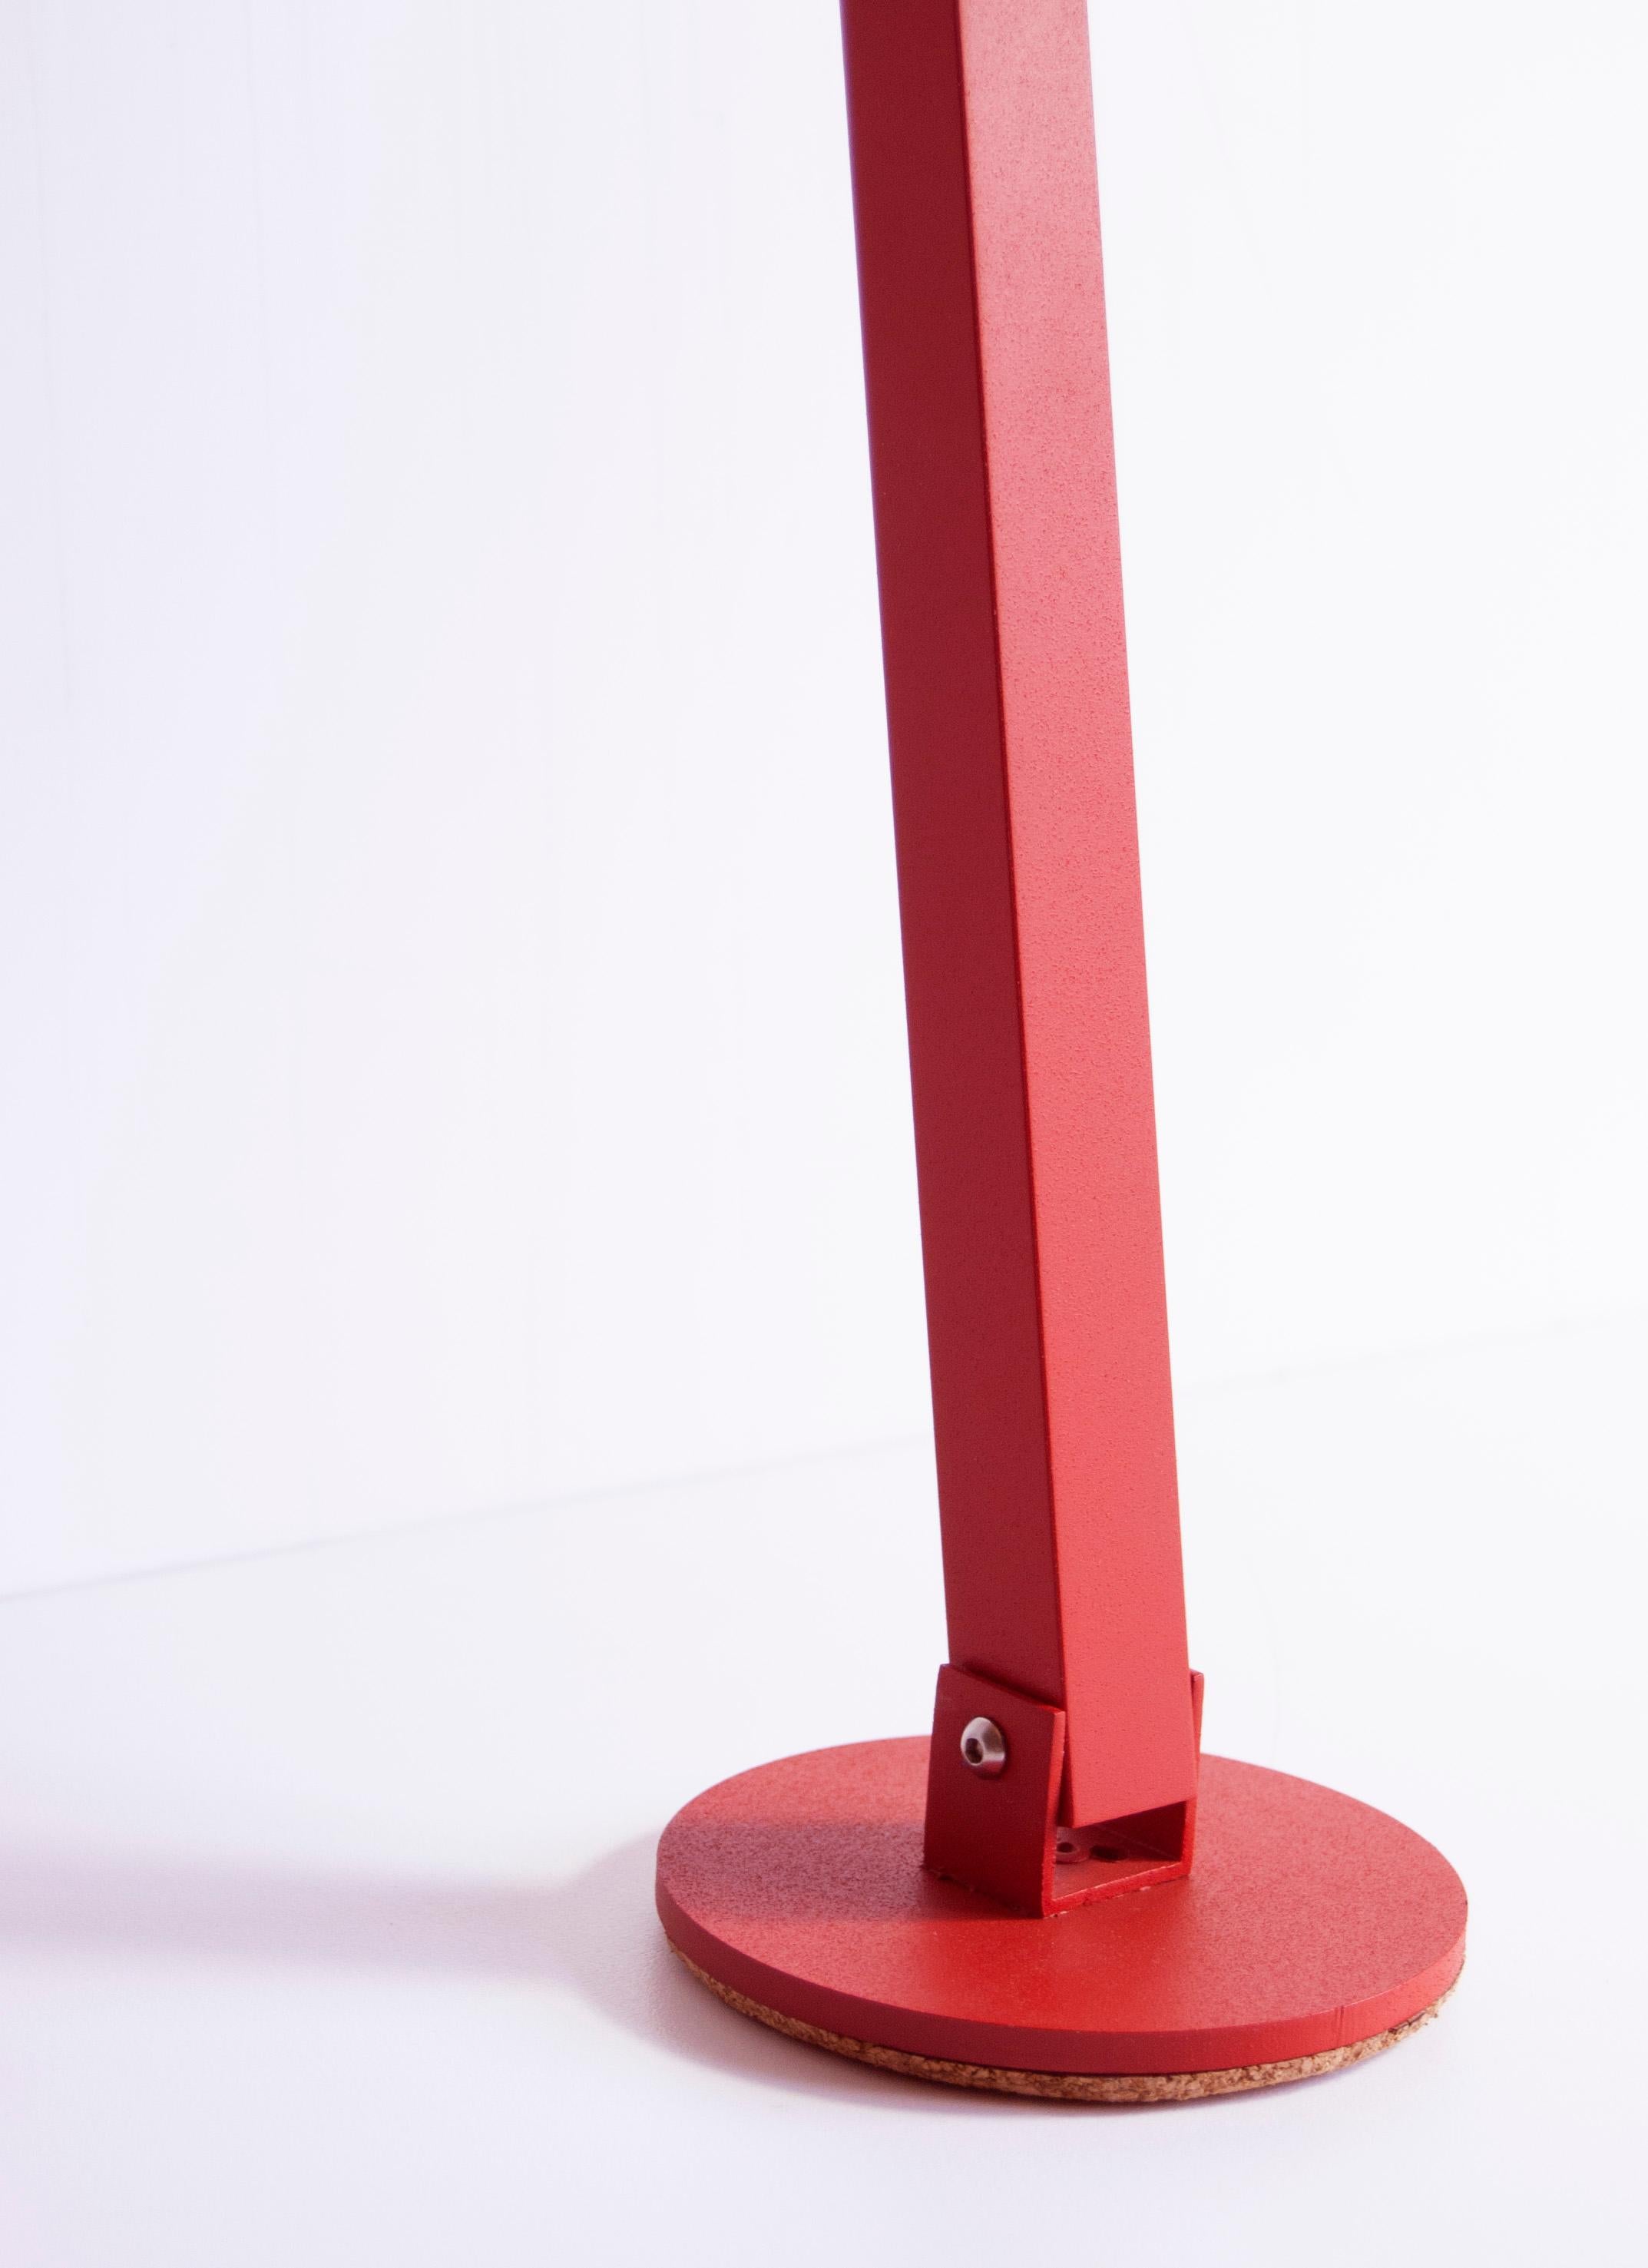 Hand-Crafted Gica Contra Floor Lamp Hand Made Minimalist Italian Design by Tommaso Cristofaro For Sale